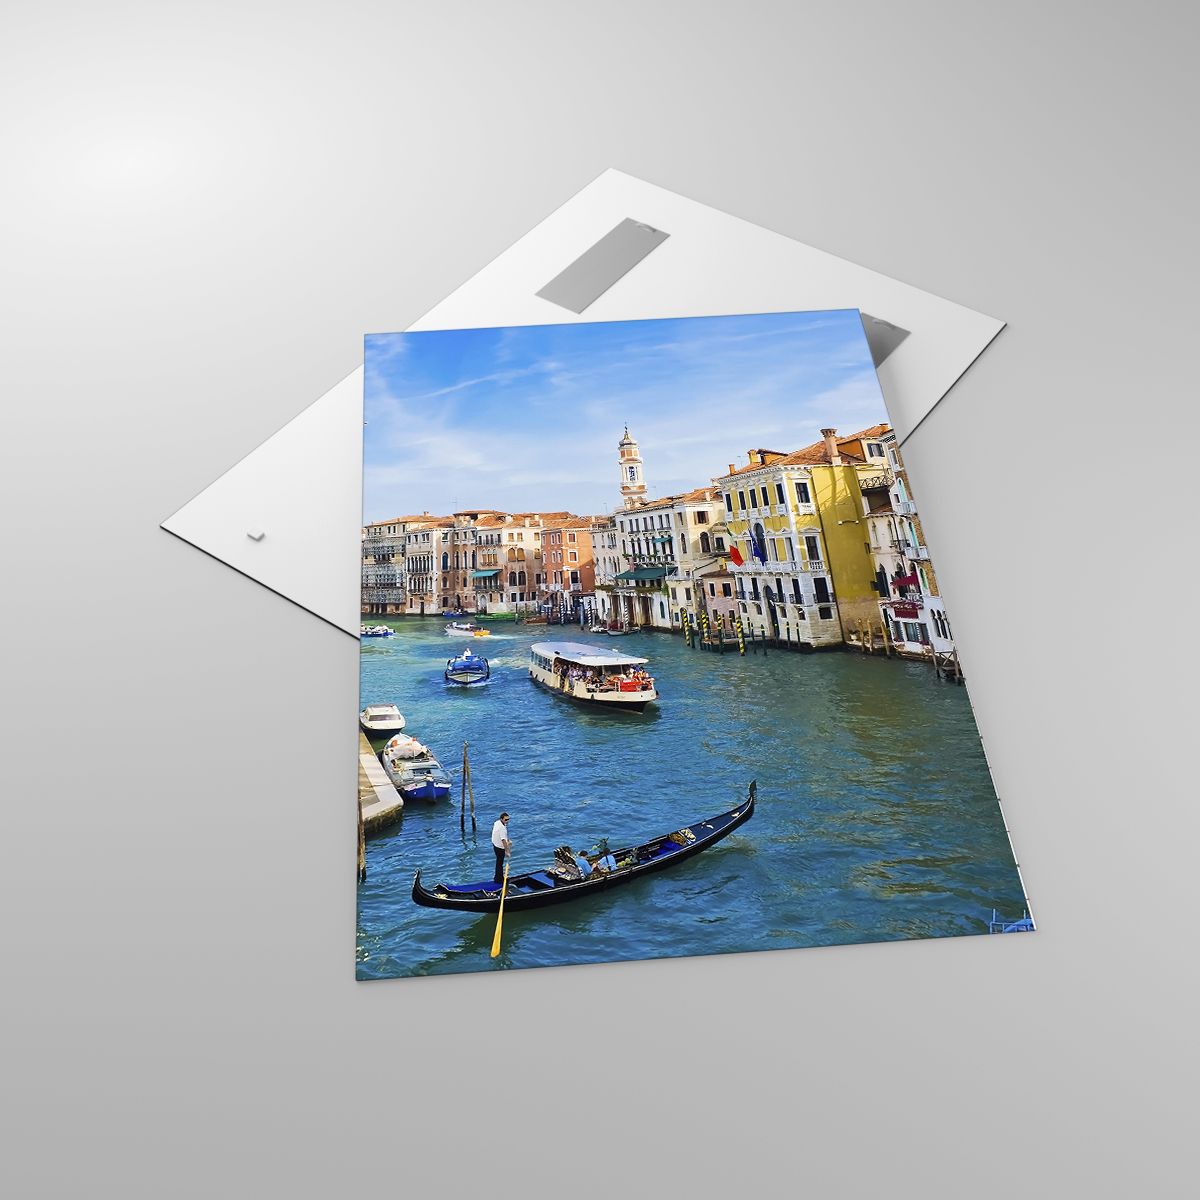 Glasbild Venedig, Glasbild Die Architektur, Glasbild Canal Grande, Glasbild Gondel, Glasbild Reisen